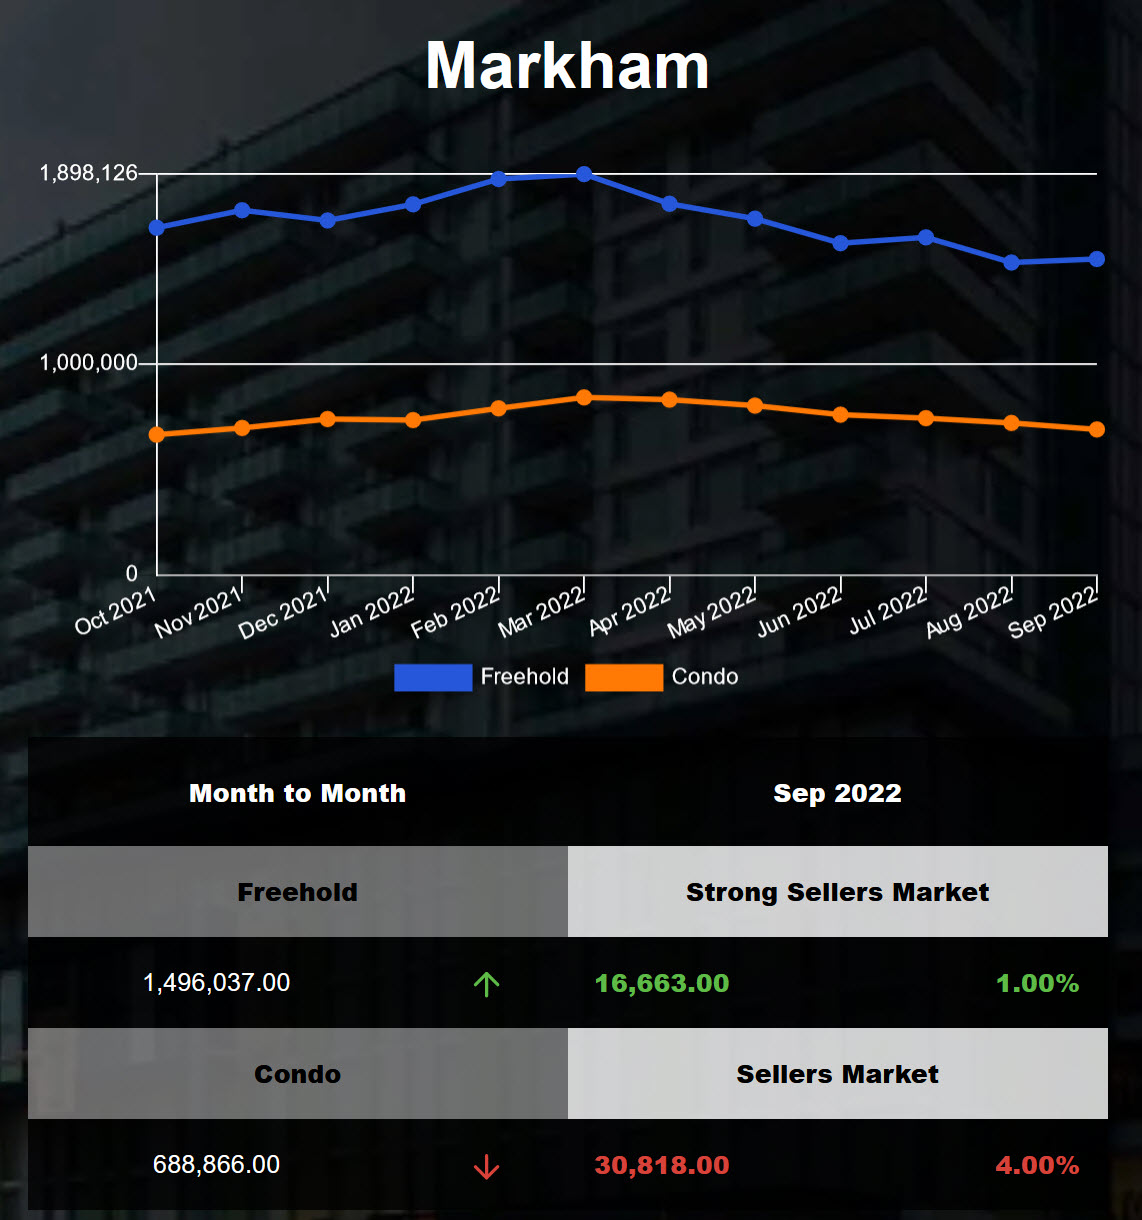 Markham freehold average housing price stabilized in Aug 2022